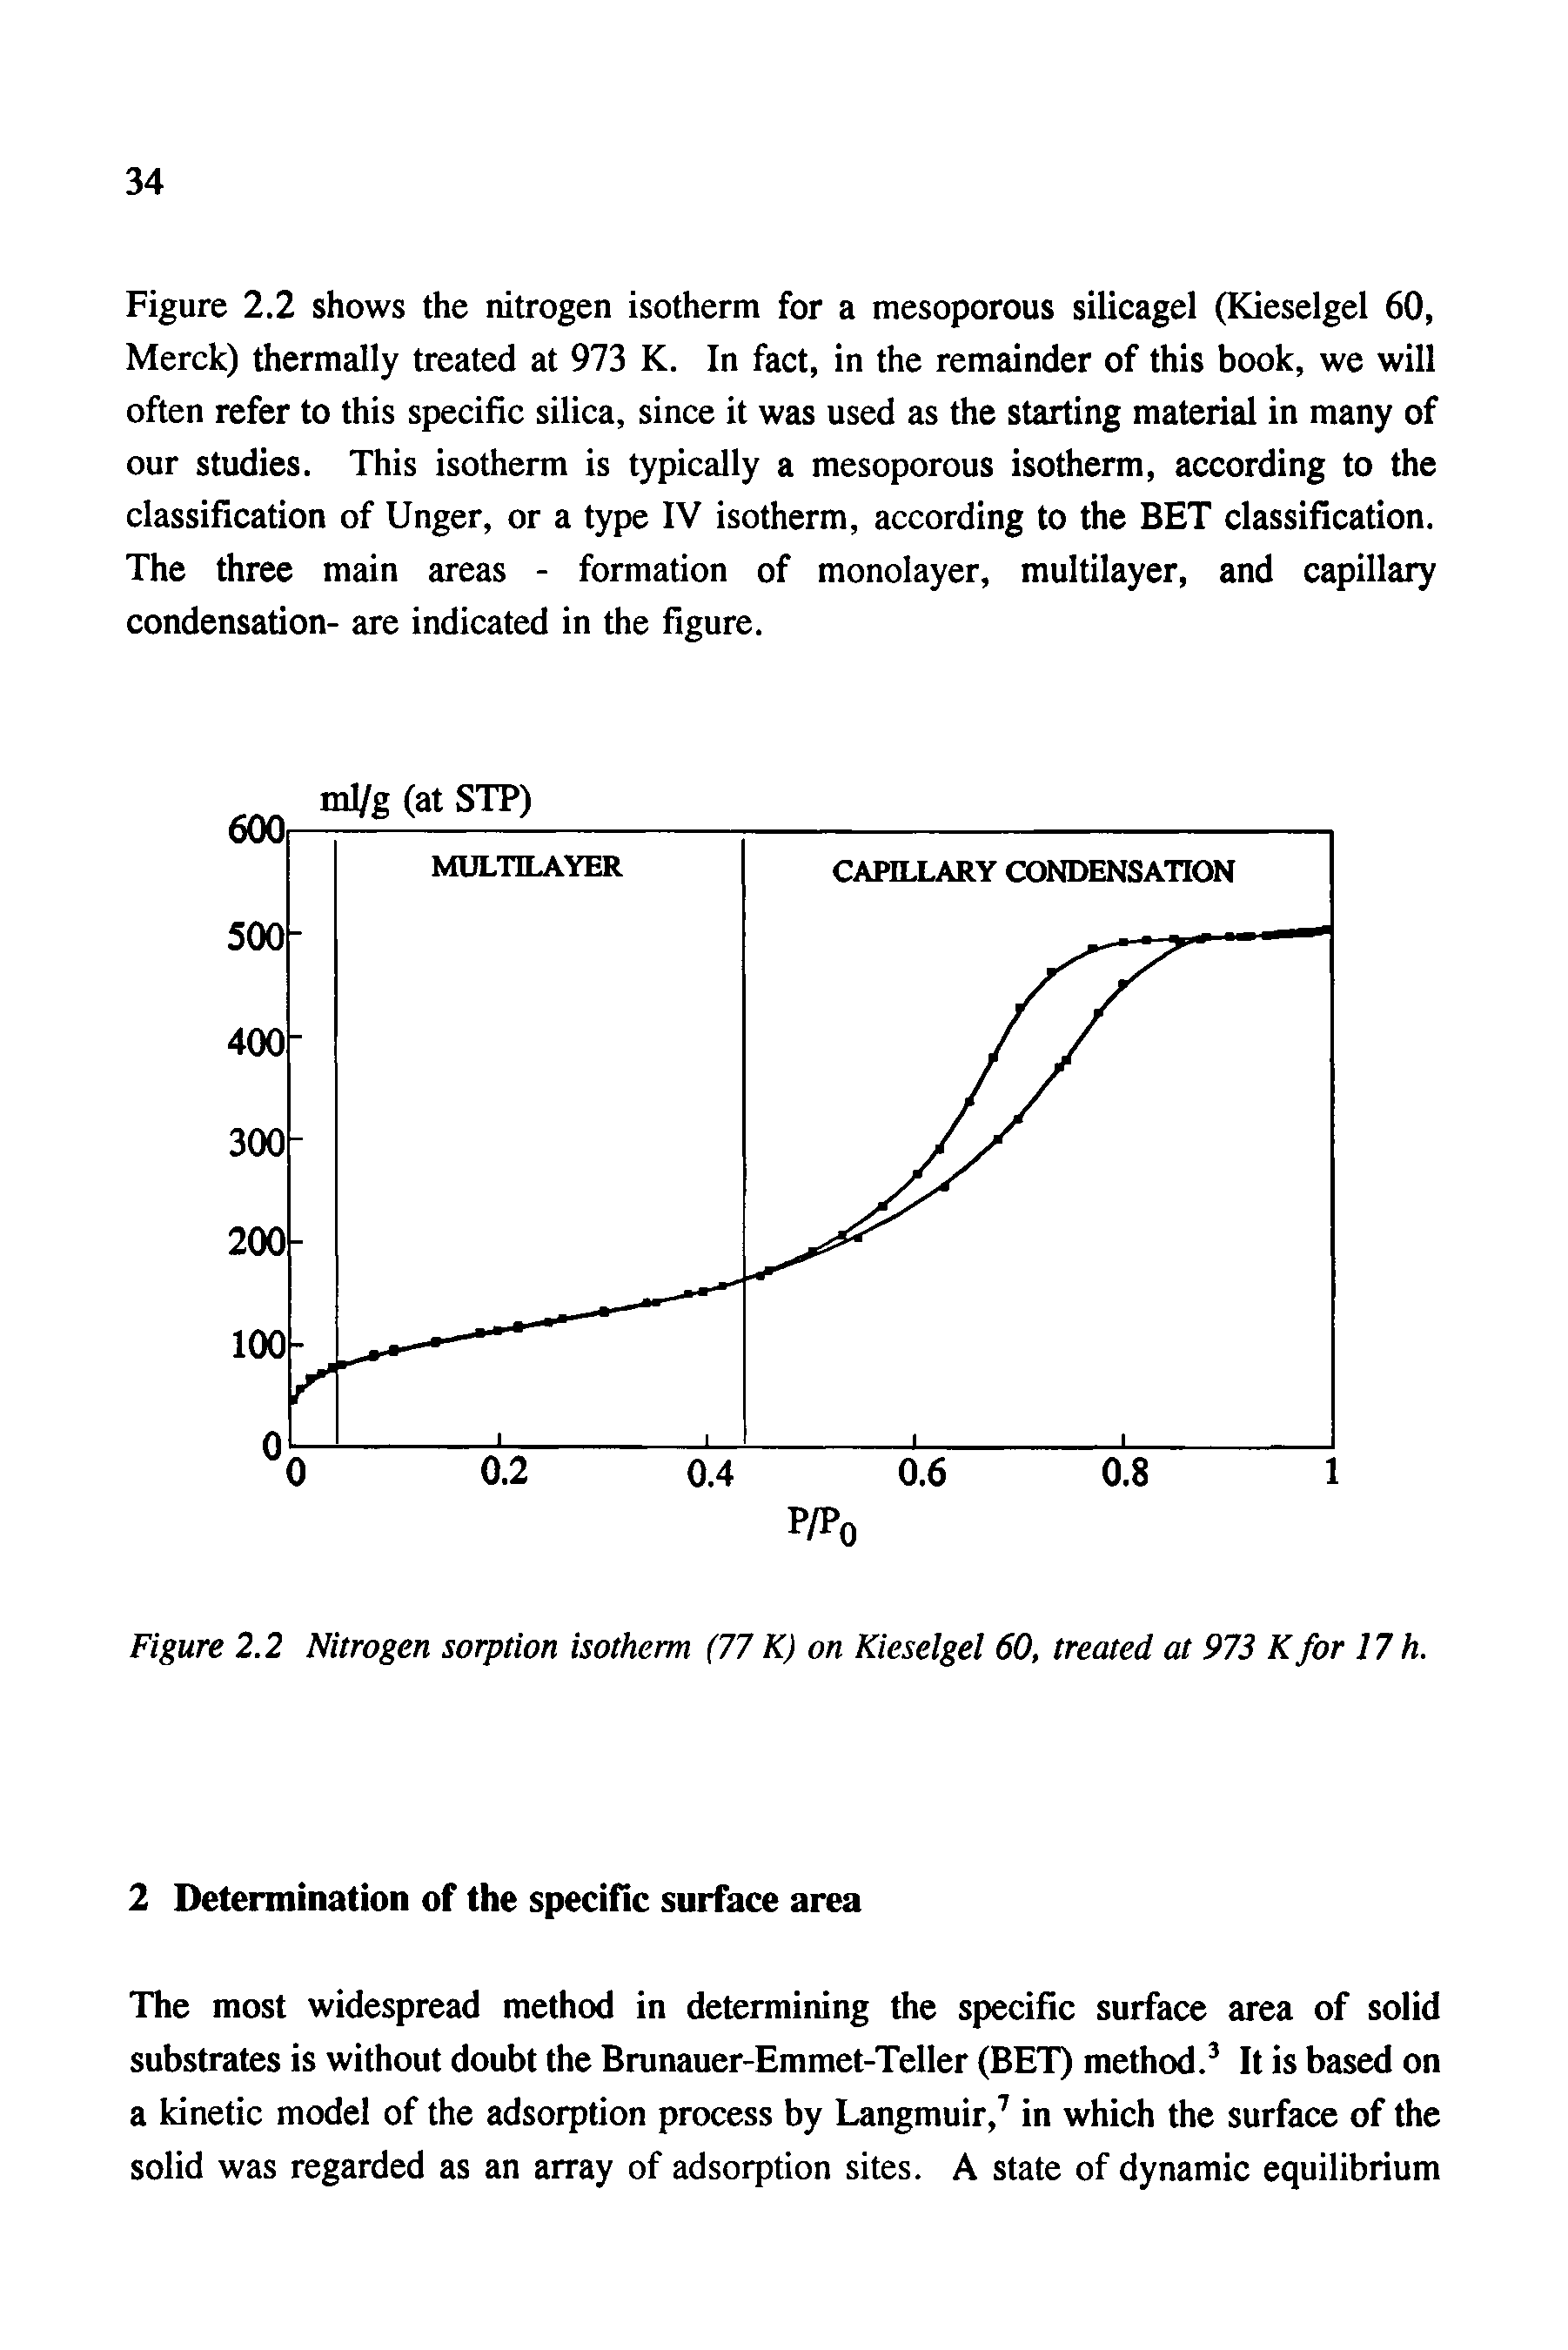 Figure 2.2 Nitrogen sorption isotherm (77 K) on Kieselgel 60, treated at 973 K for 17 h.